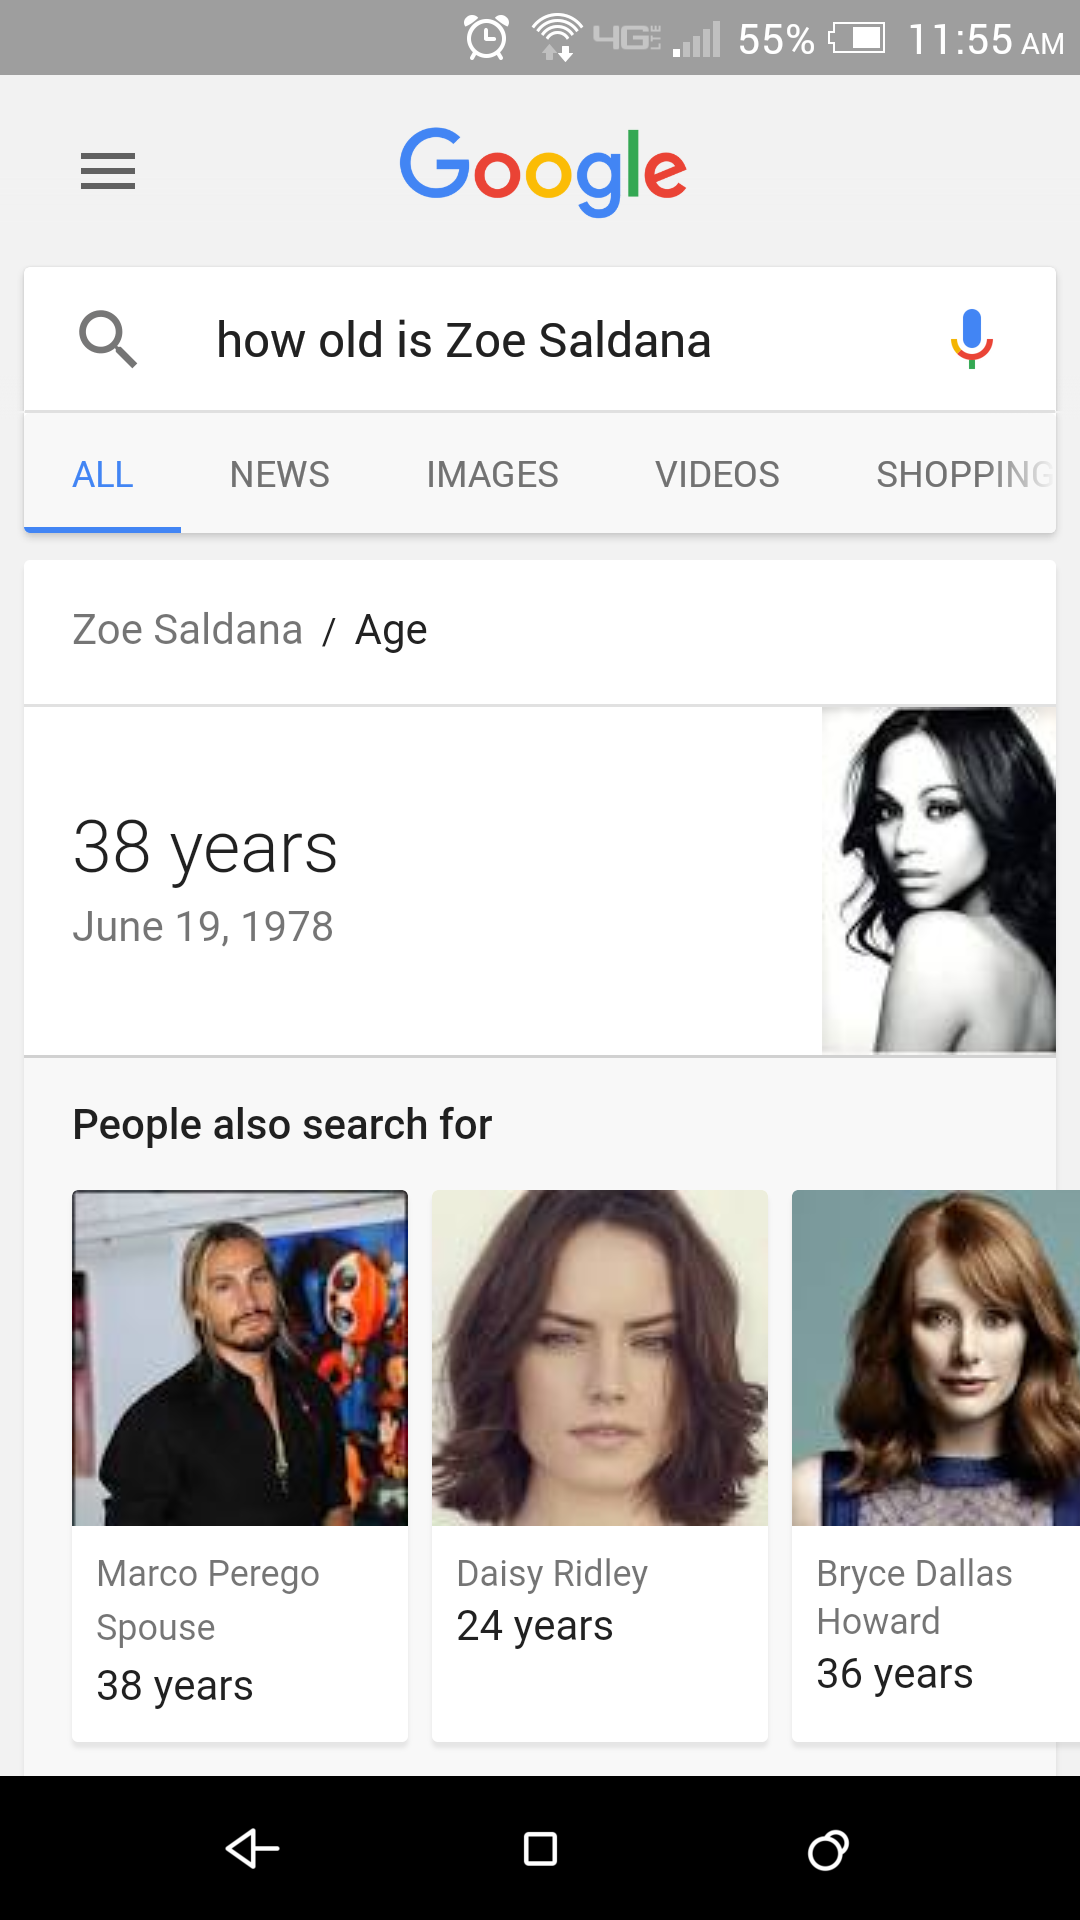 Google Voice Search Zoe Saldana age query